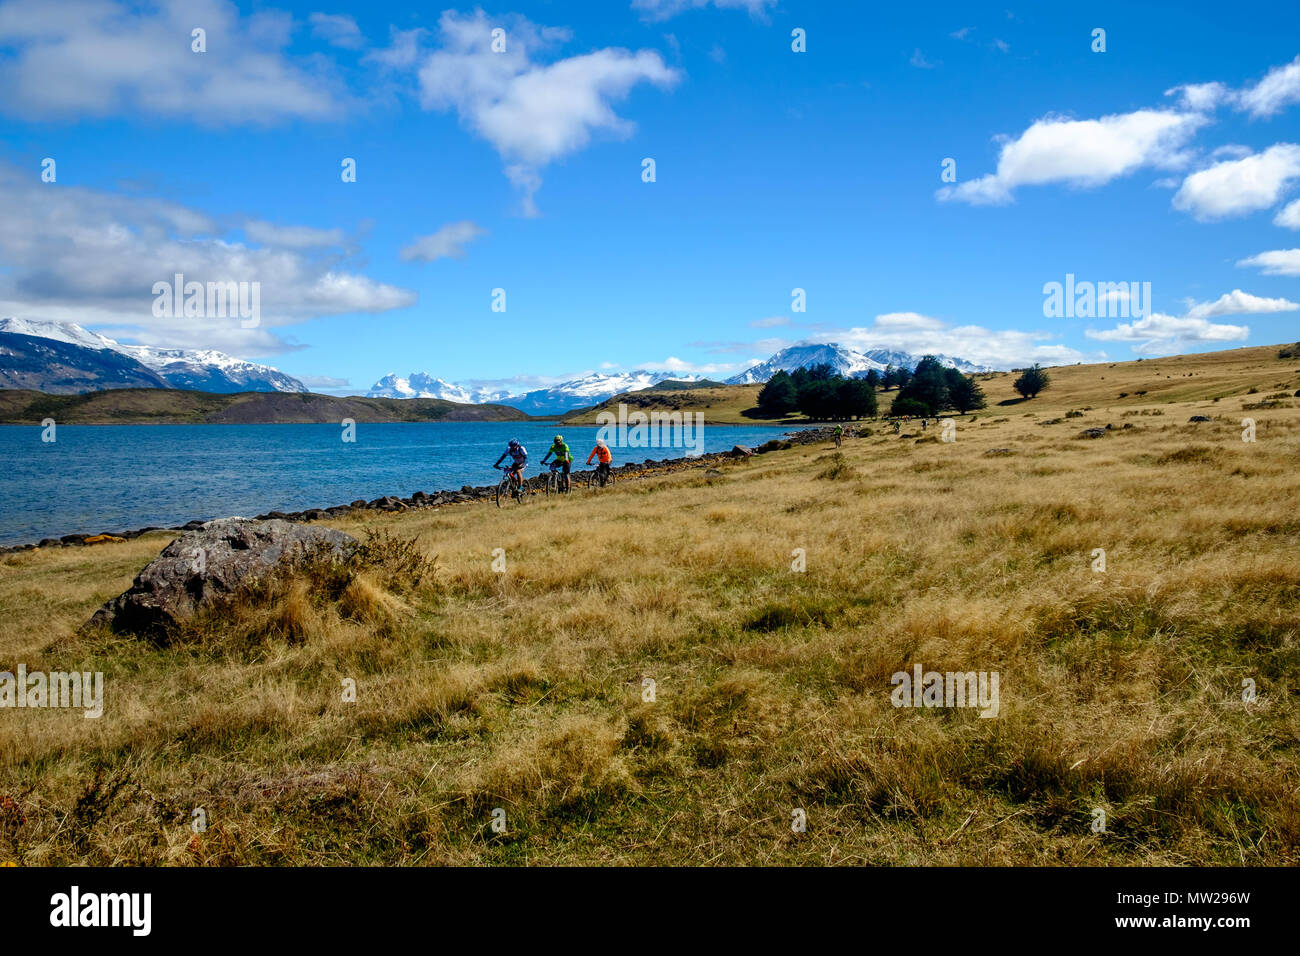 Puerto Natales, Magallanes / Chile - Oktober 16 2016: Mountainbiker fahren entlang eines Sees in der spektakulären Umgebung von Puerto Natales, Chile. Stockfoto